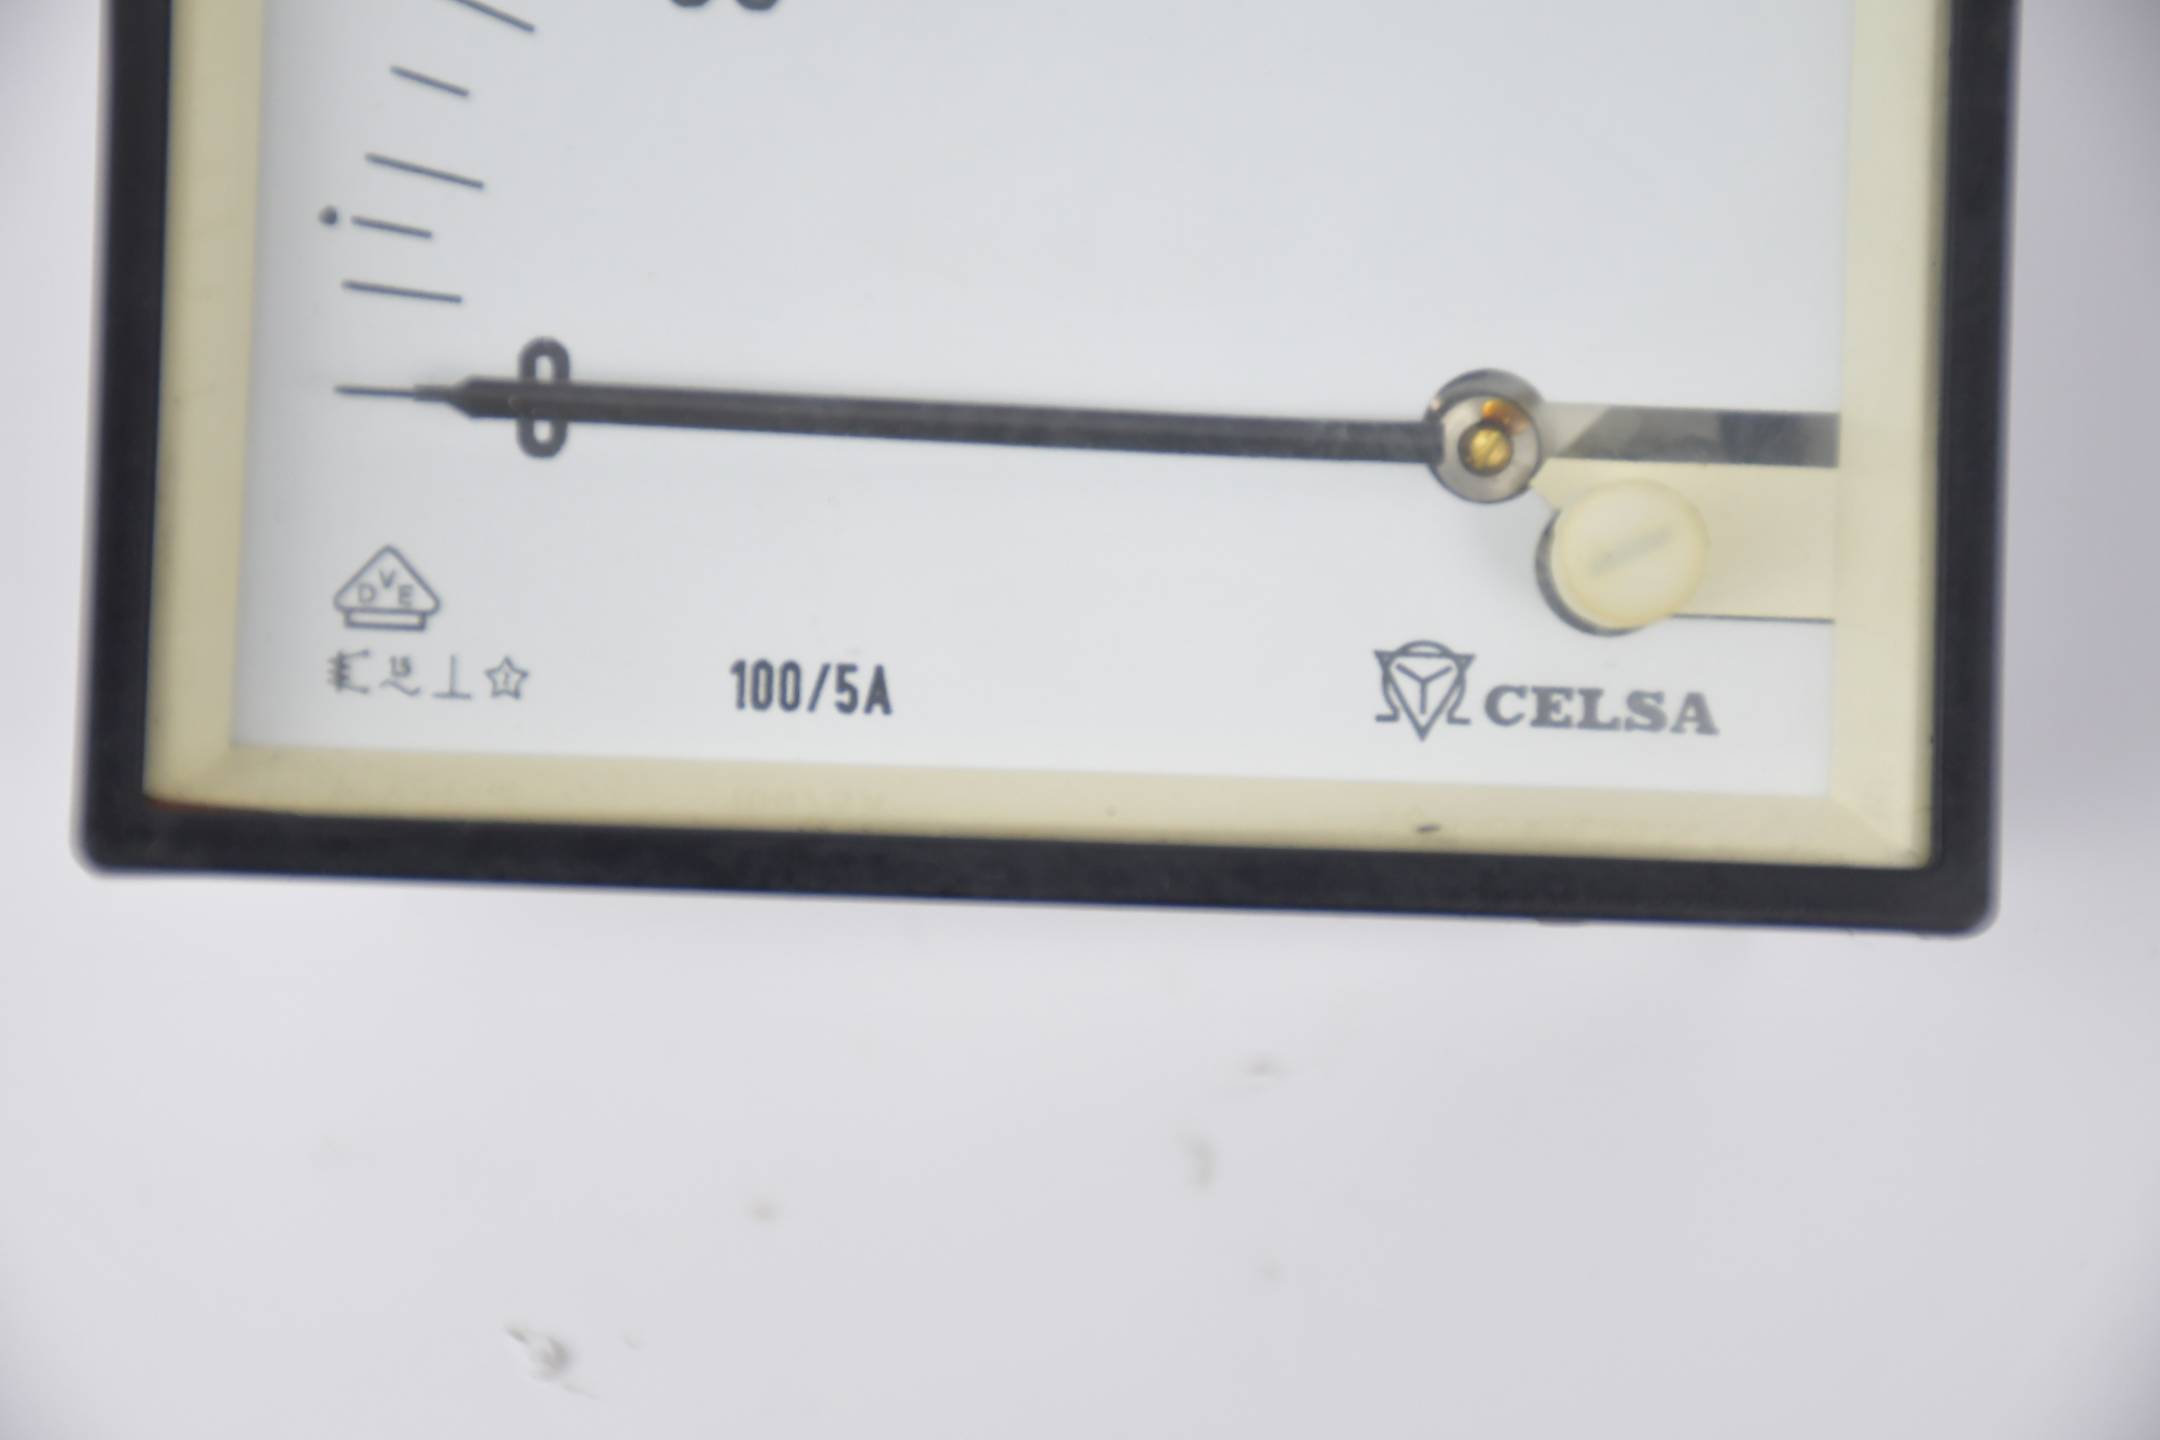  CELSA Strommesser Ammeter 100/5A